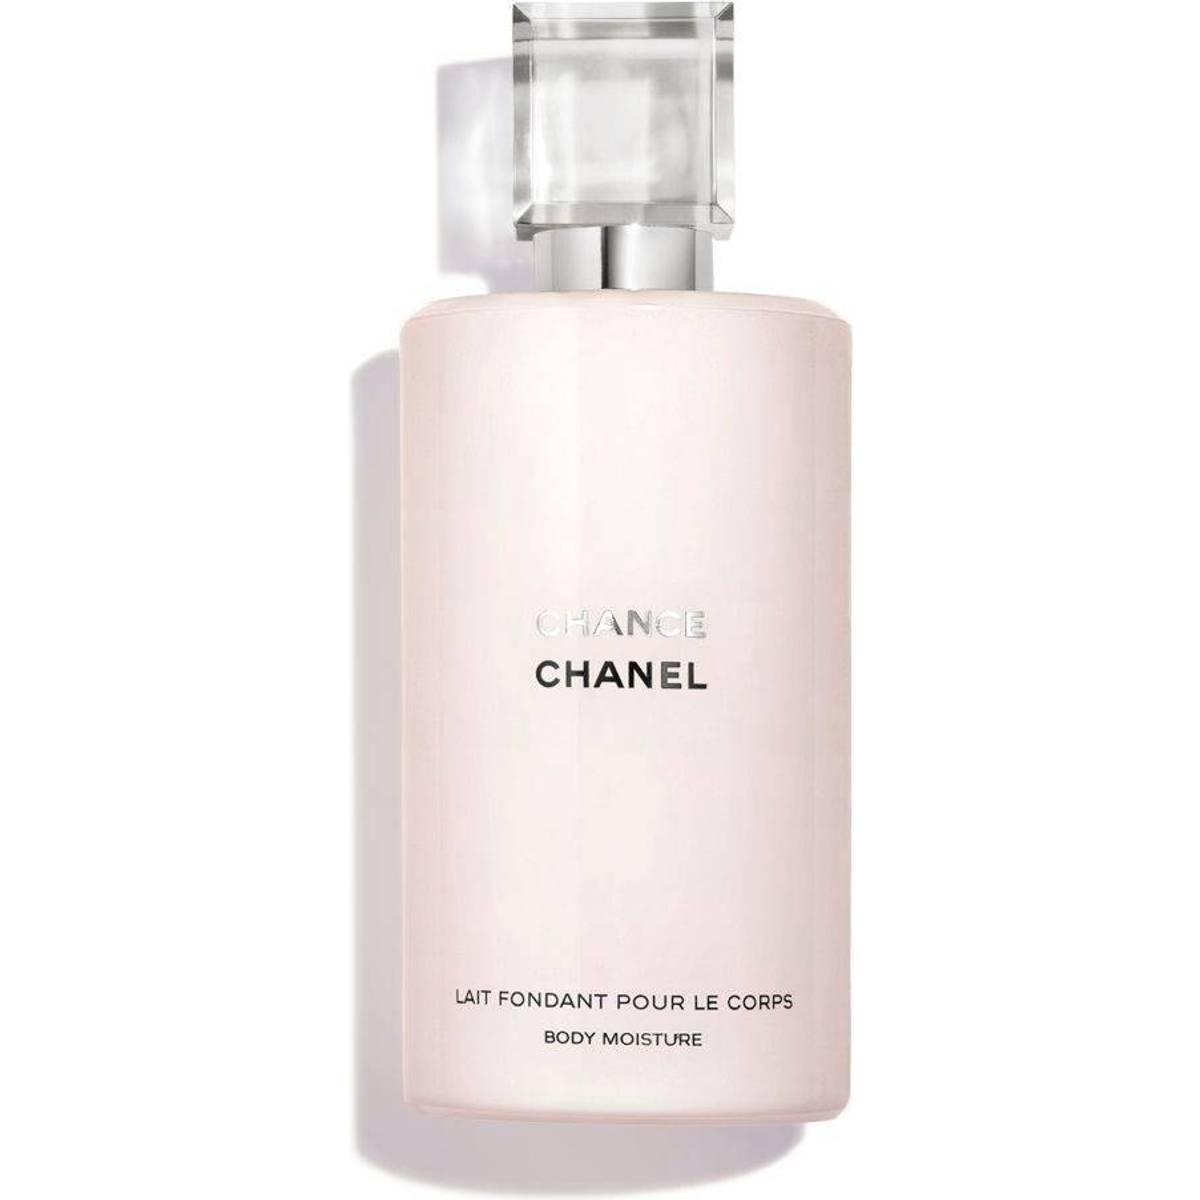 Chanel chance body lotion • Hitta lägsta pris hos PriceRunner nu